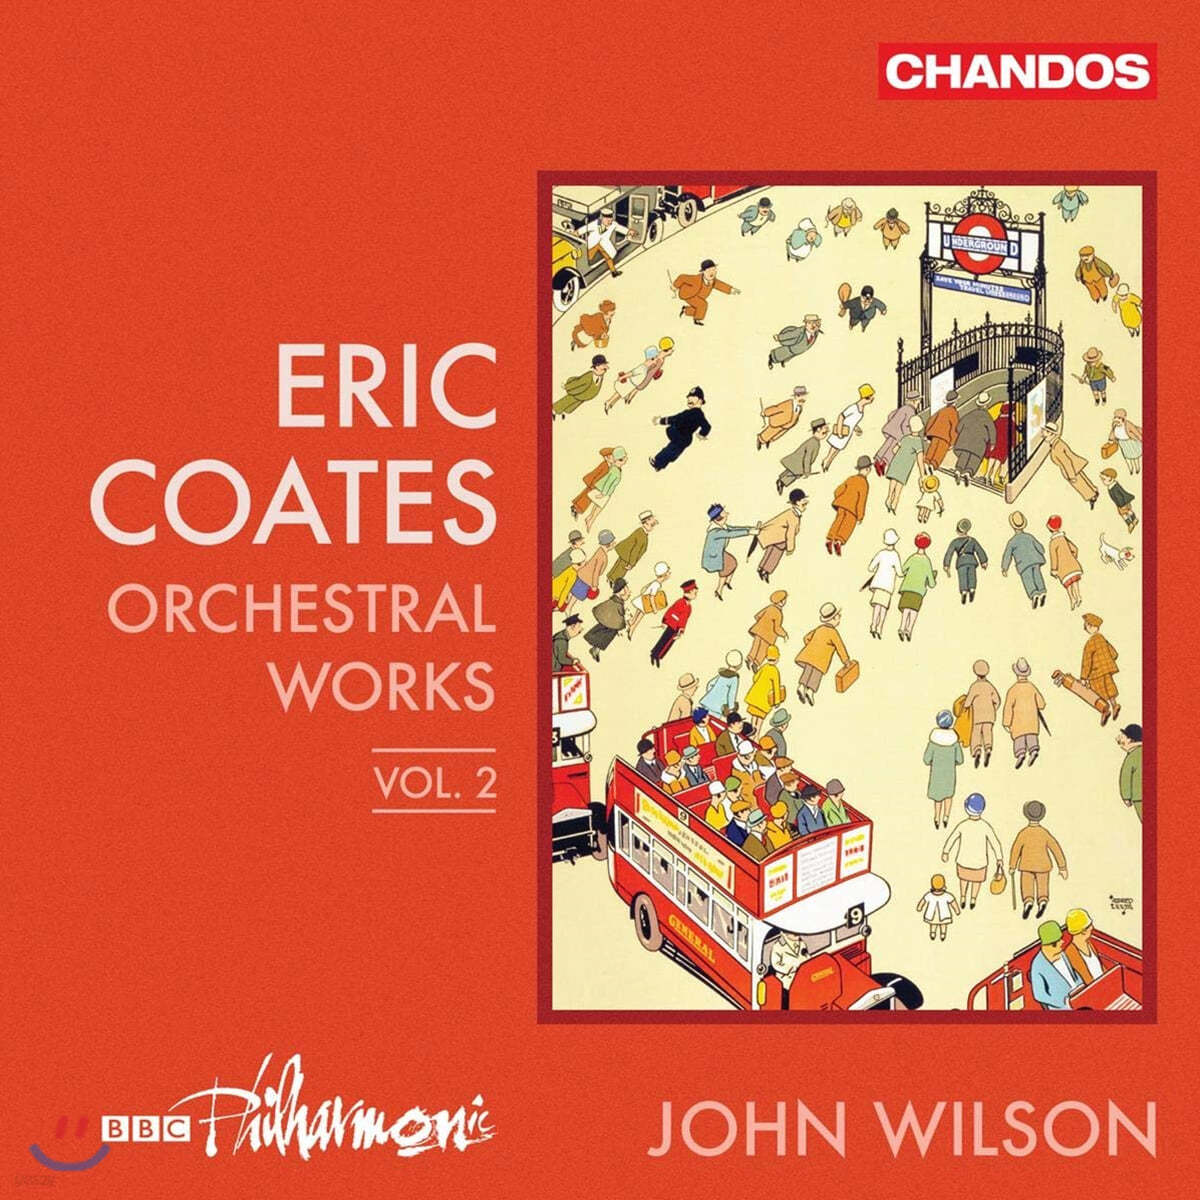 John Wilson 에릭 코츠: 관현악 작품 2집 (Eric Coates: Orchestral Works Vol. 2) 